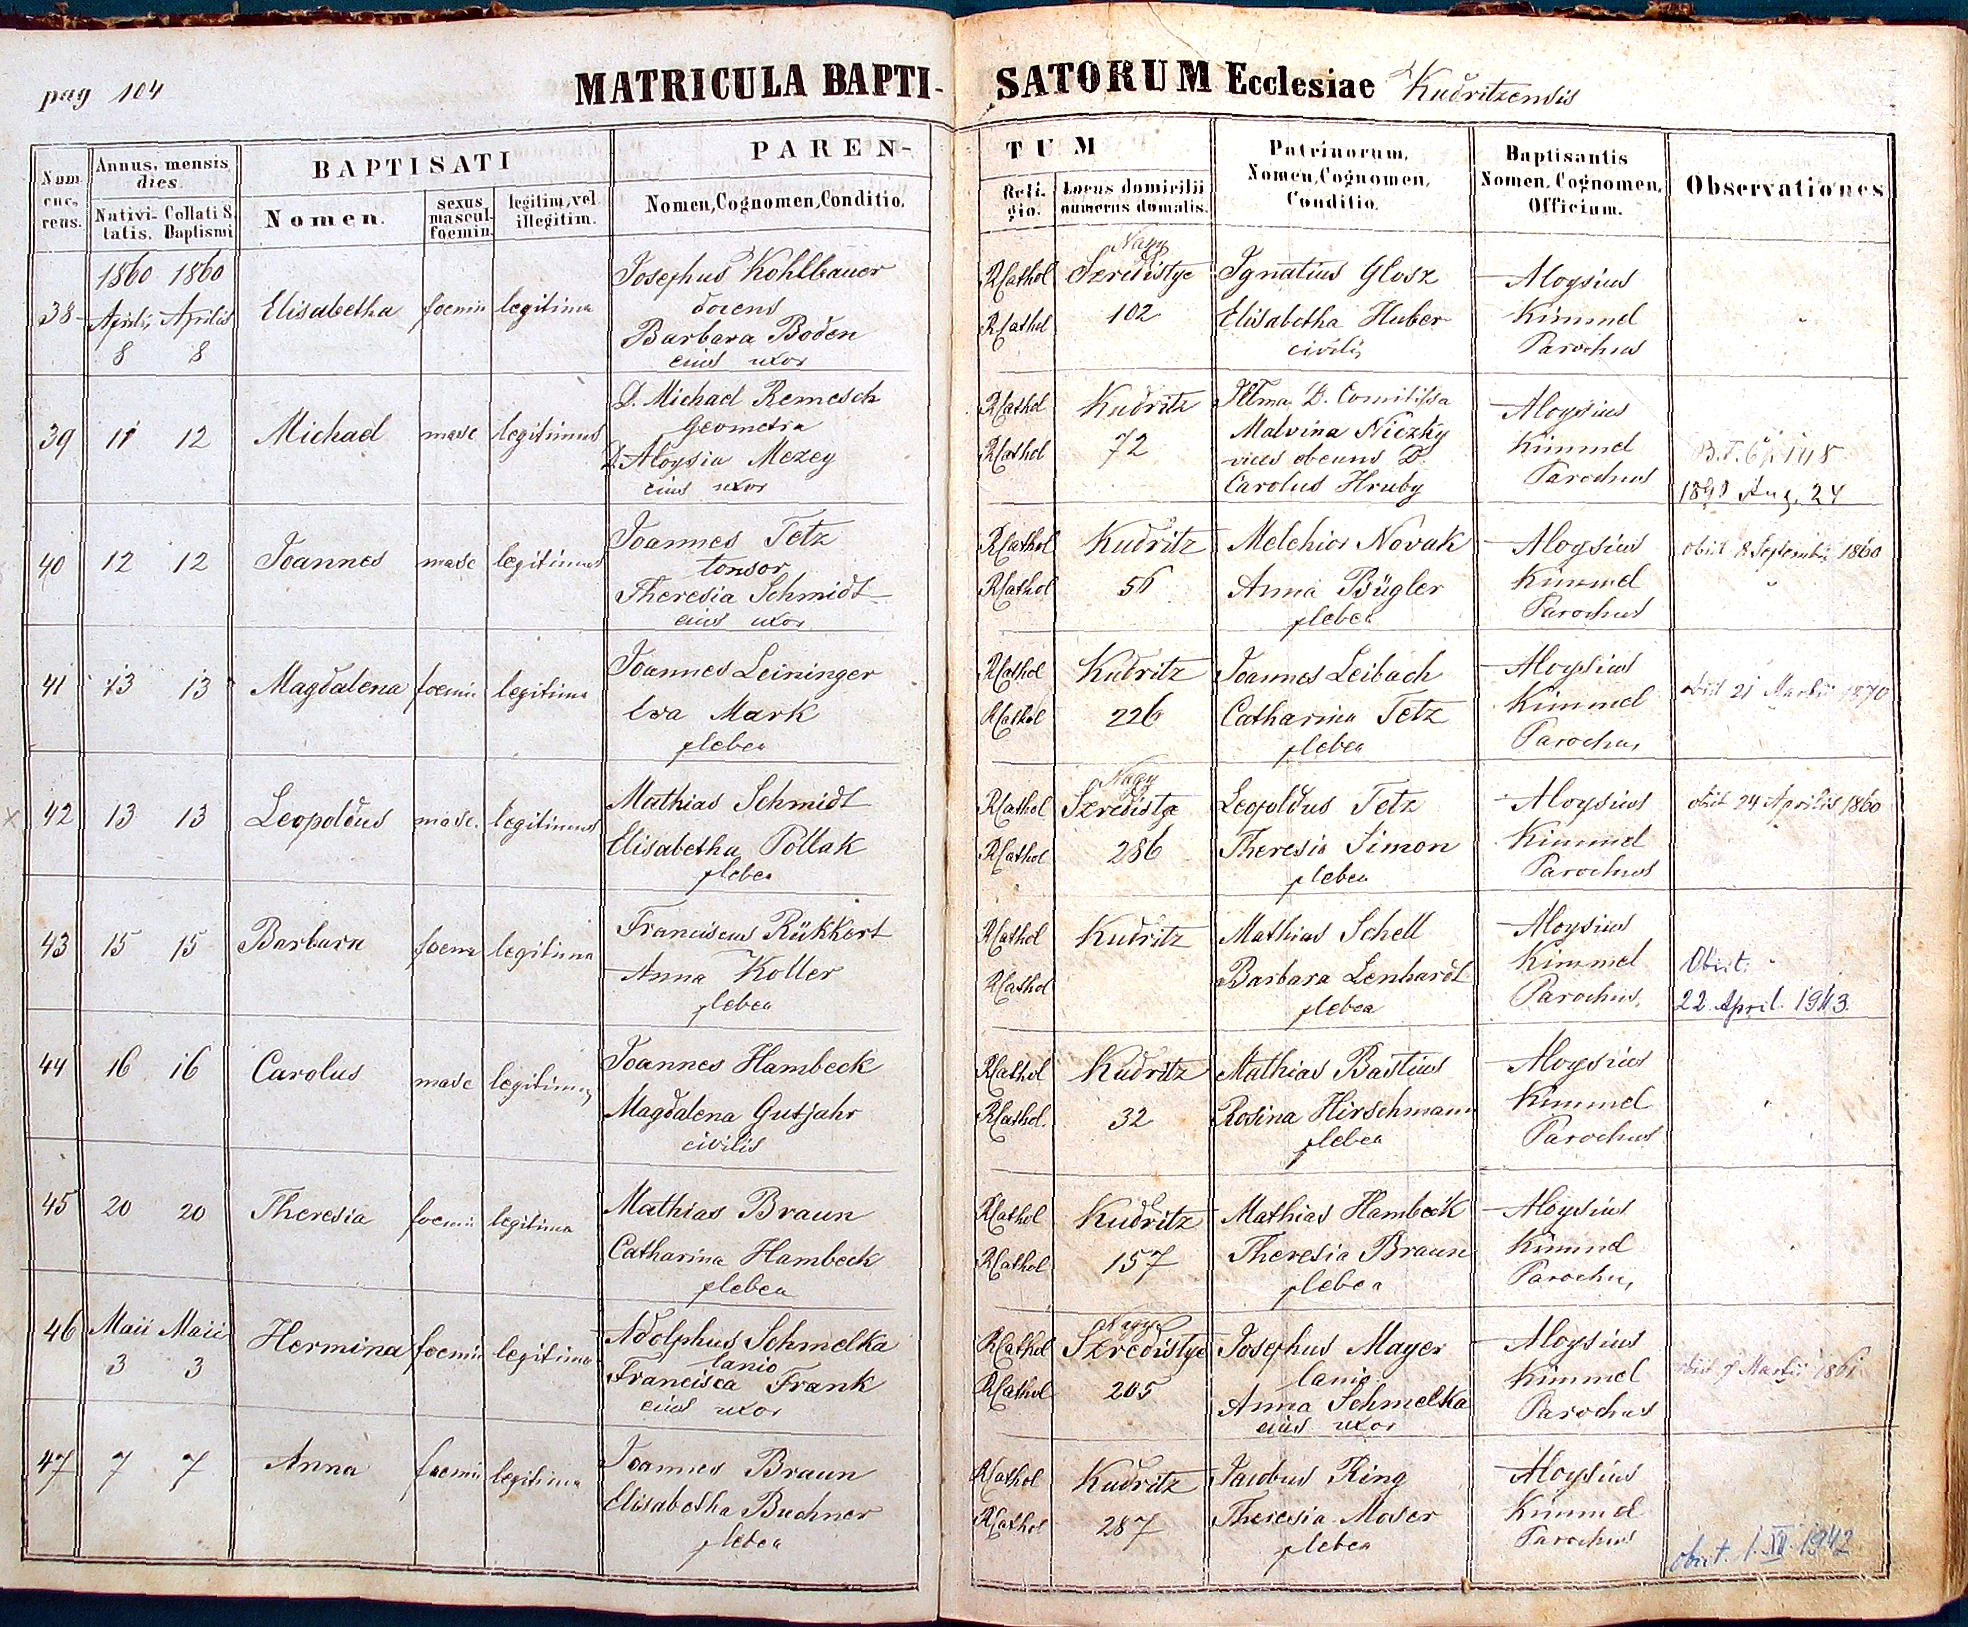 images/church_records/BIRTHS/1852-1870B/104